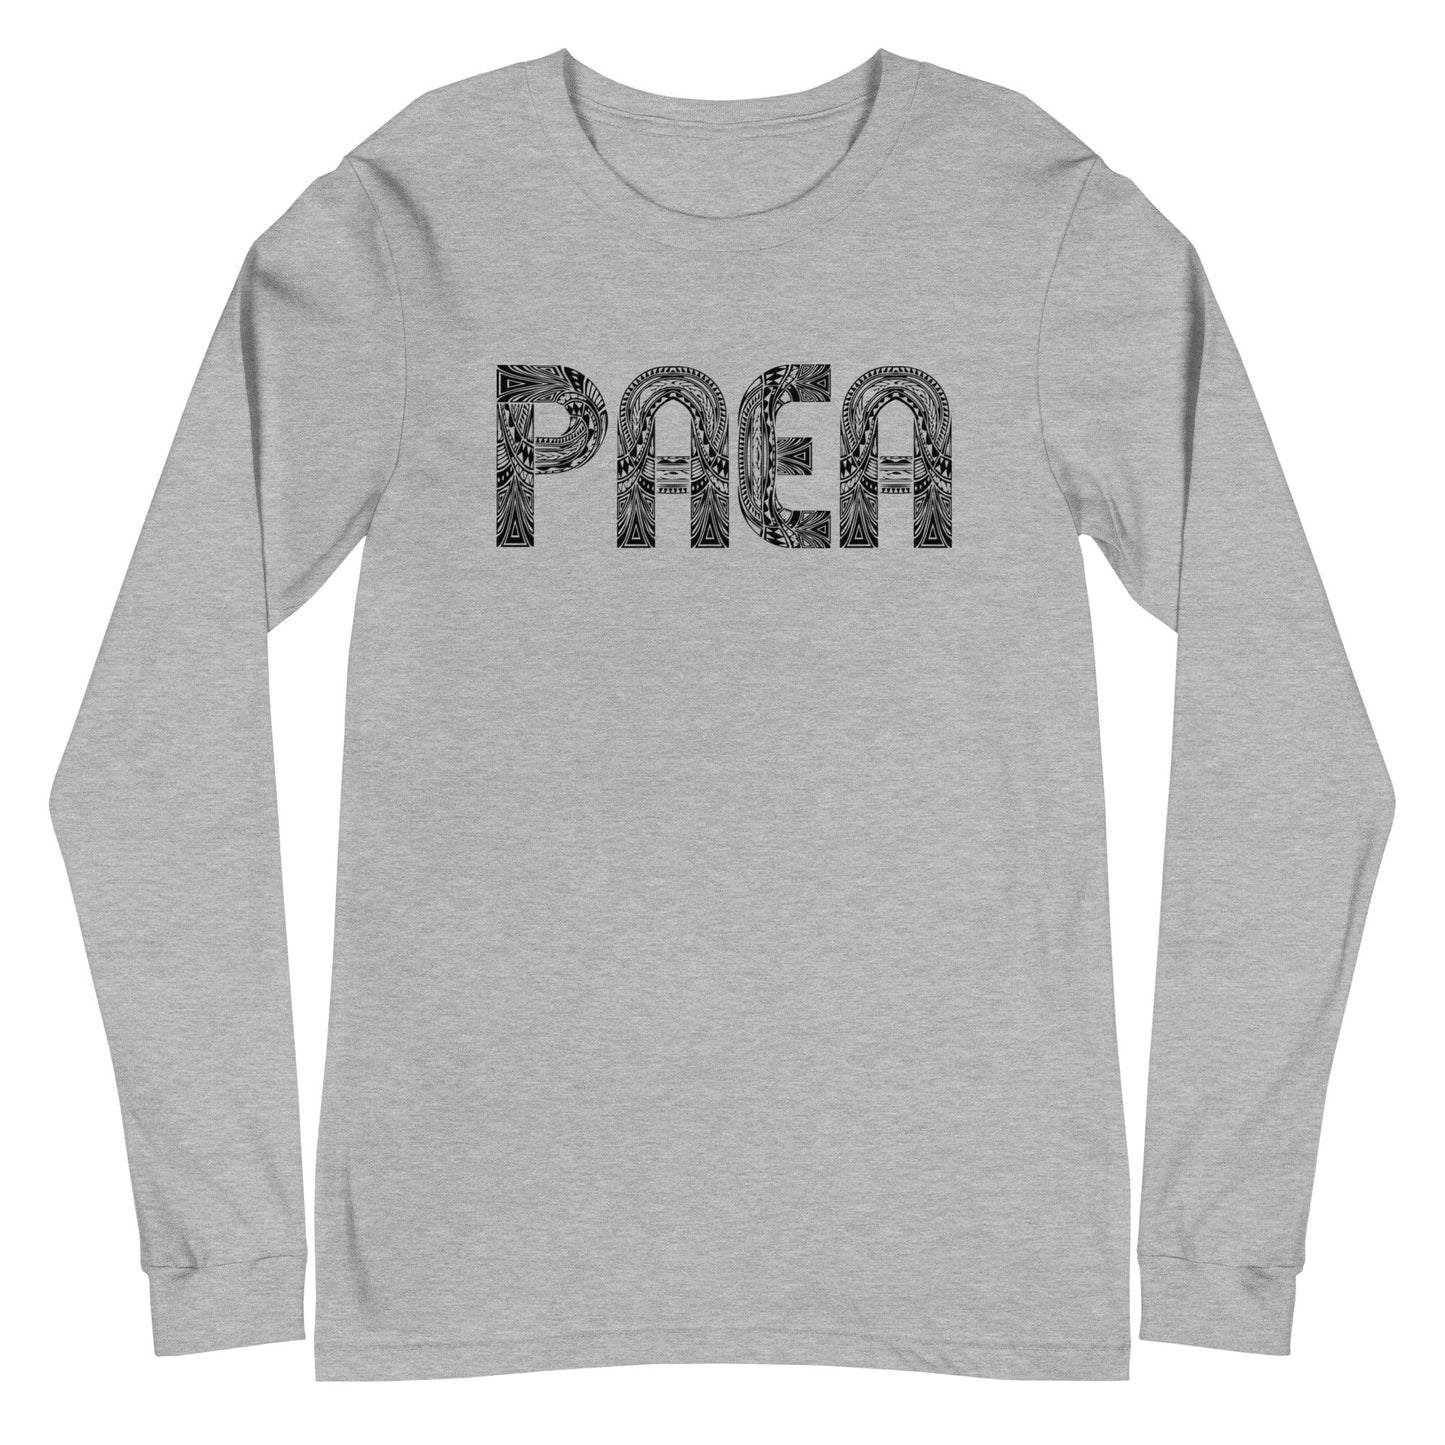 Phill Paea "Origins" Long Sleeve Tee - Fan Arch